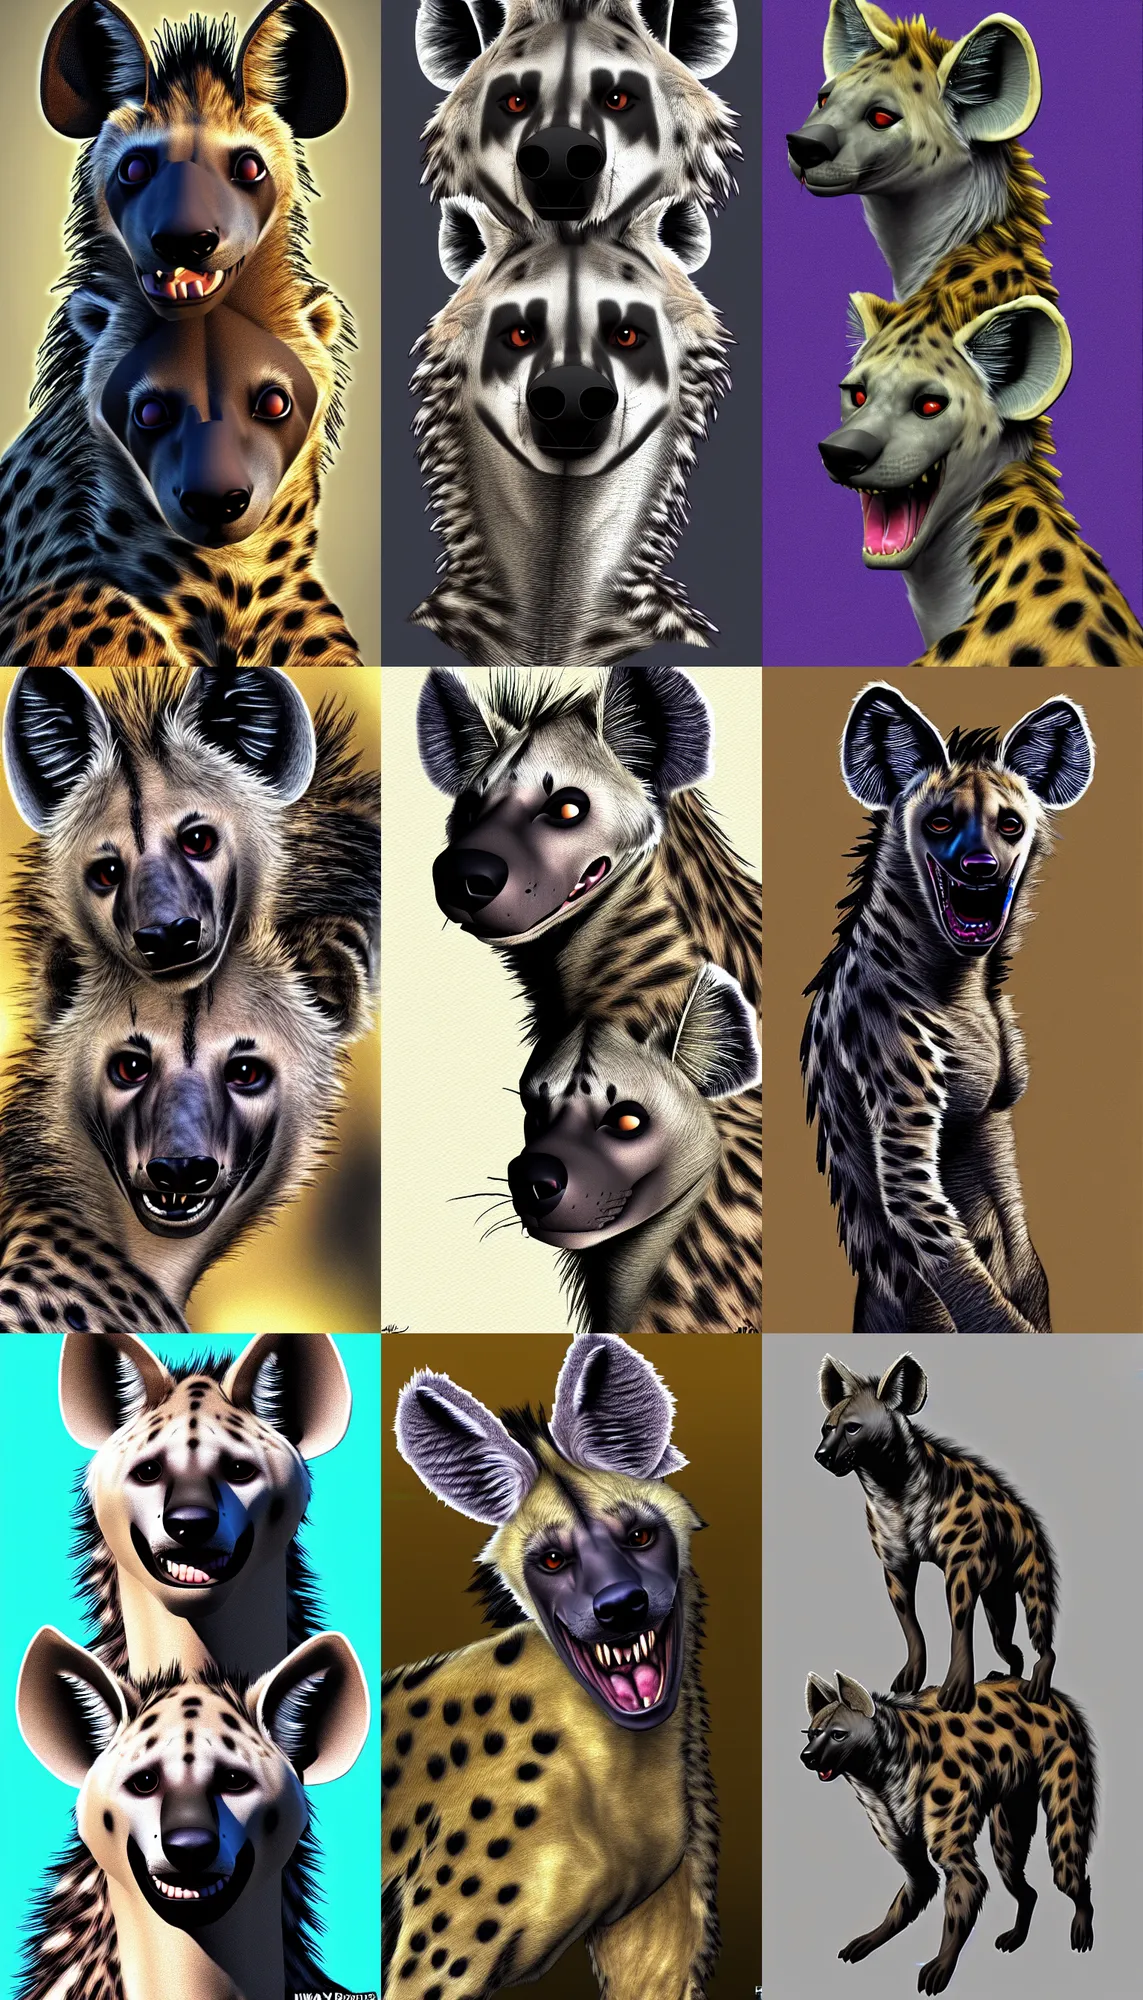 Prompt: a furry hyena fursona, insane - resolution, photorealistic, trending on weasyl